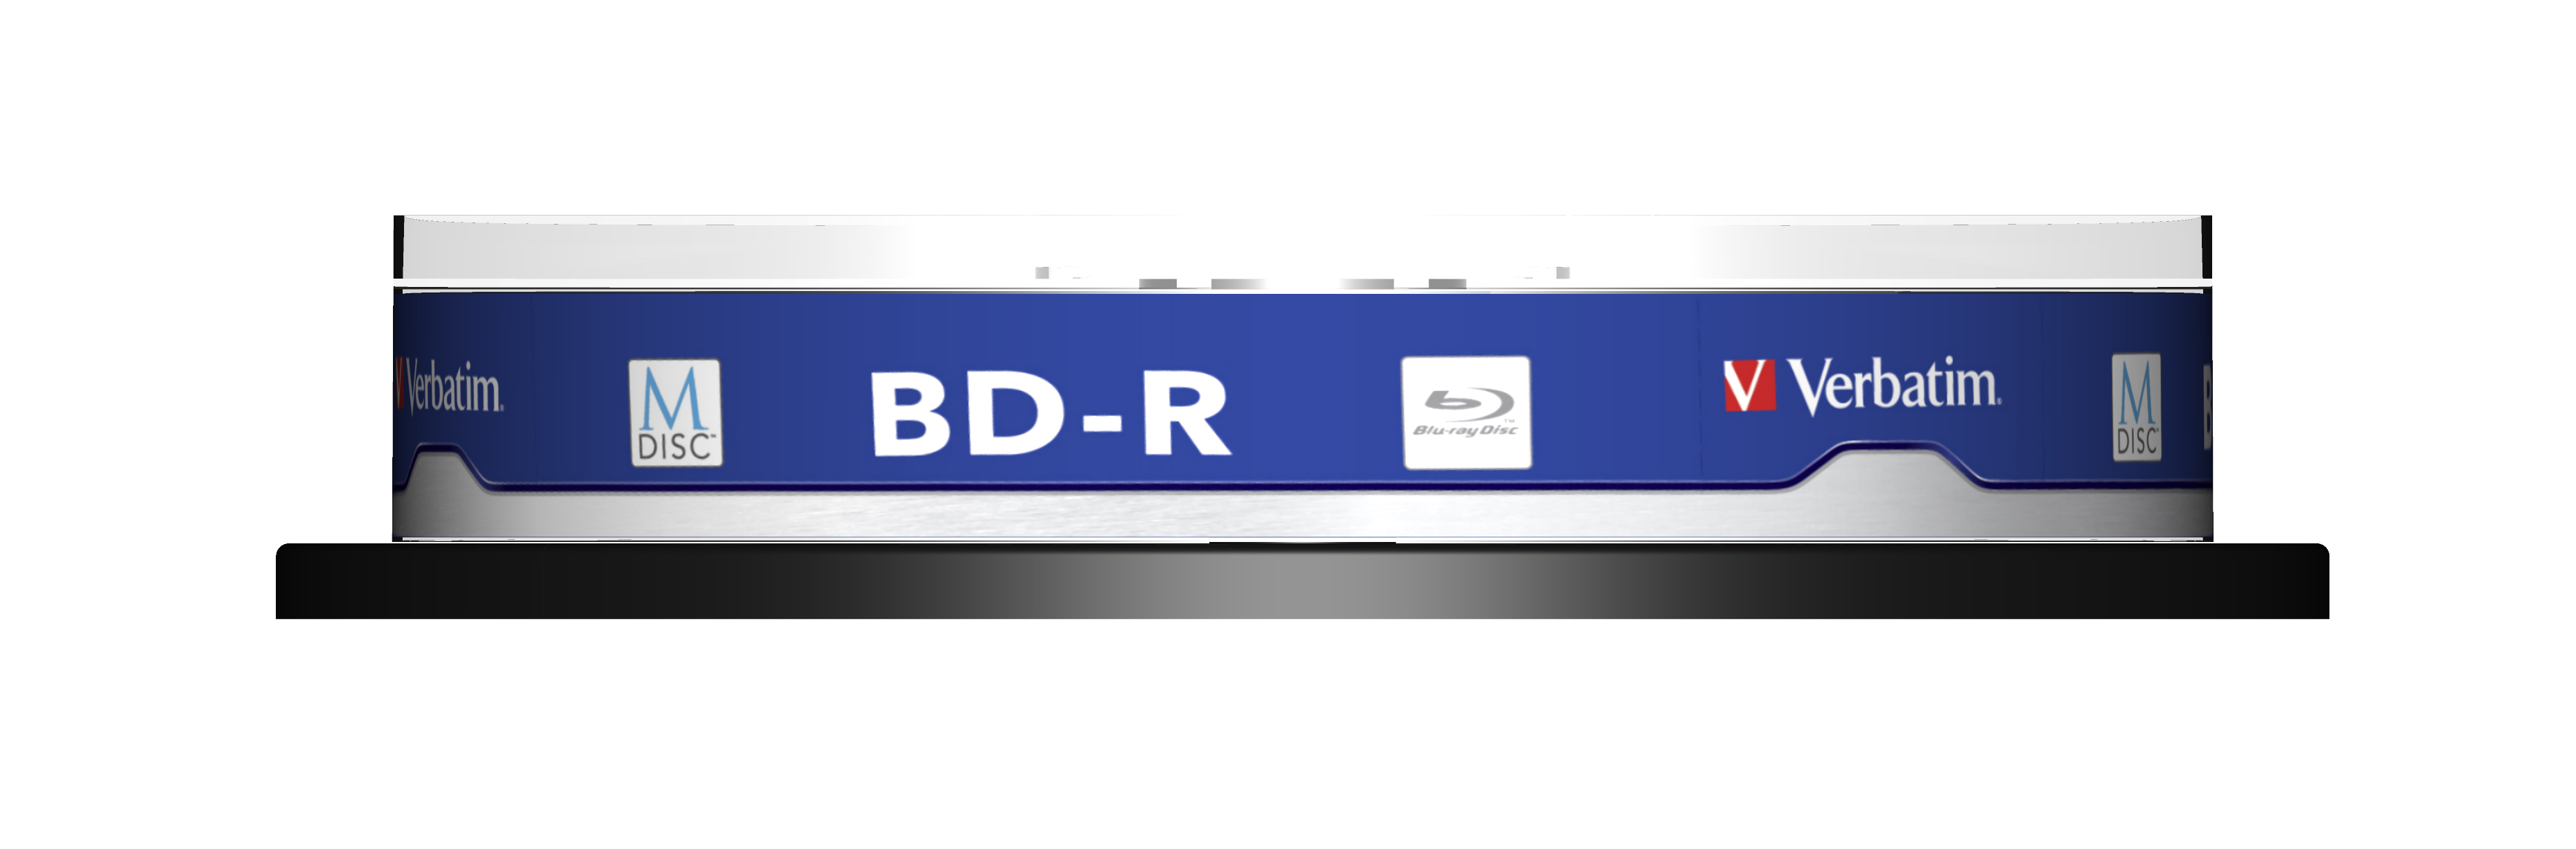 Verbatim M-Disc - 10 x BD-R - 25 GB 4x - mit Tintenstrahldrucker bedruckbare Oberfläche